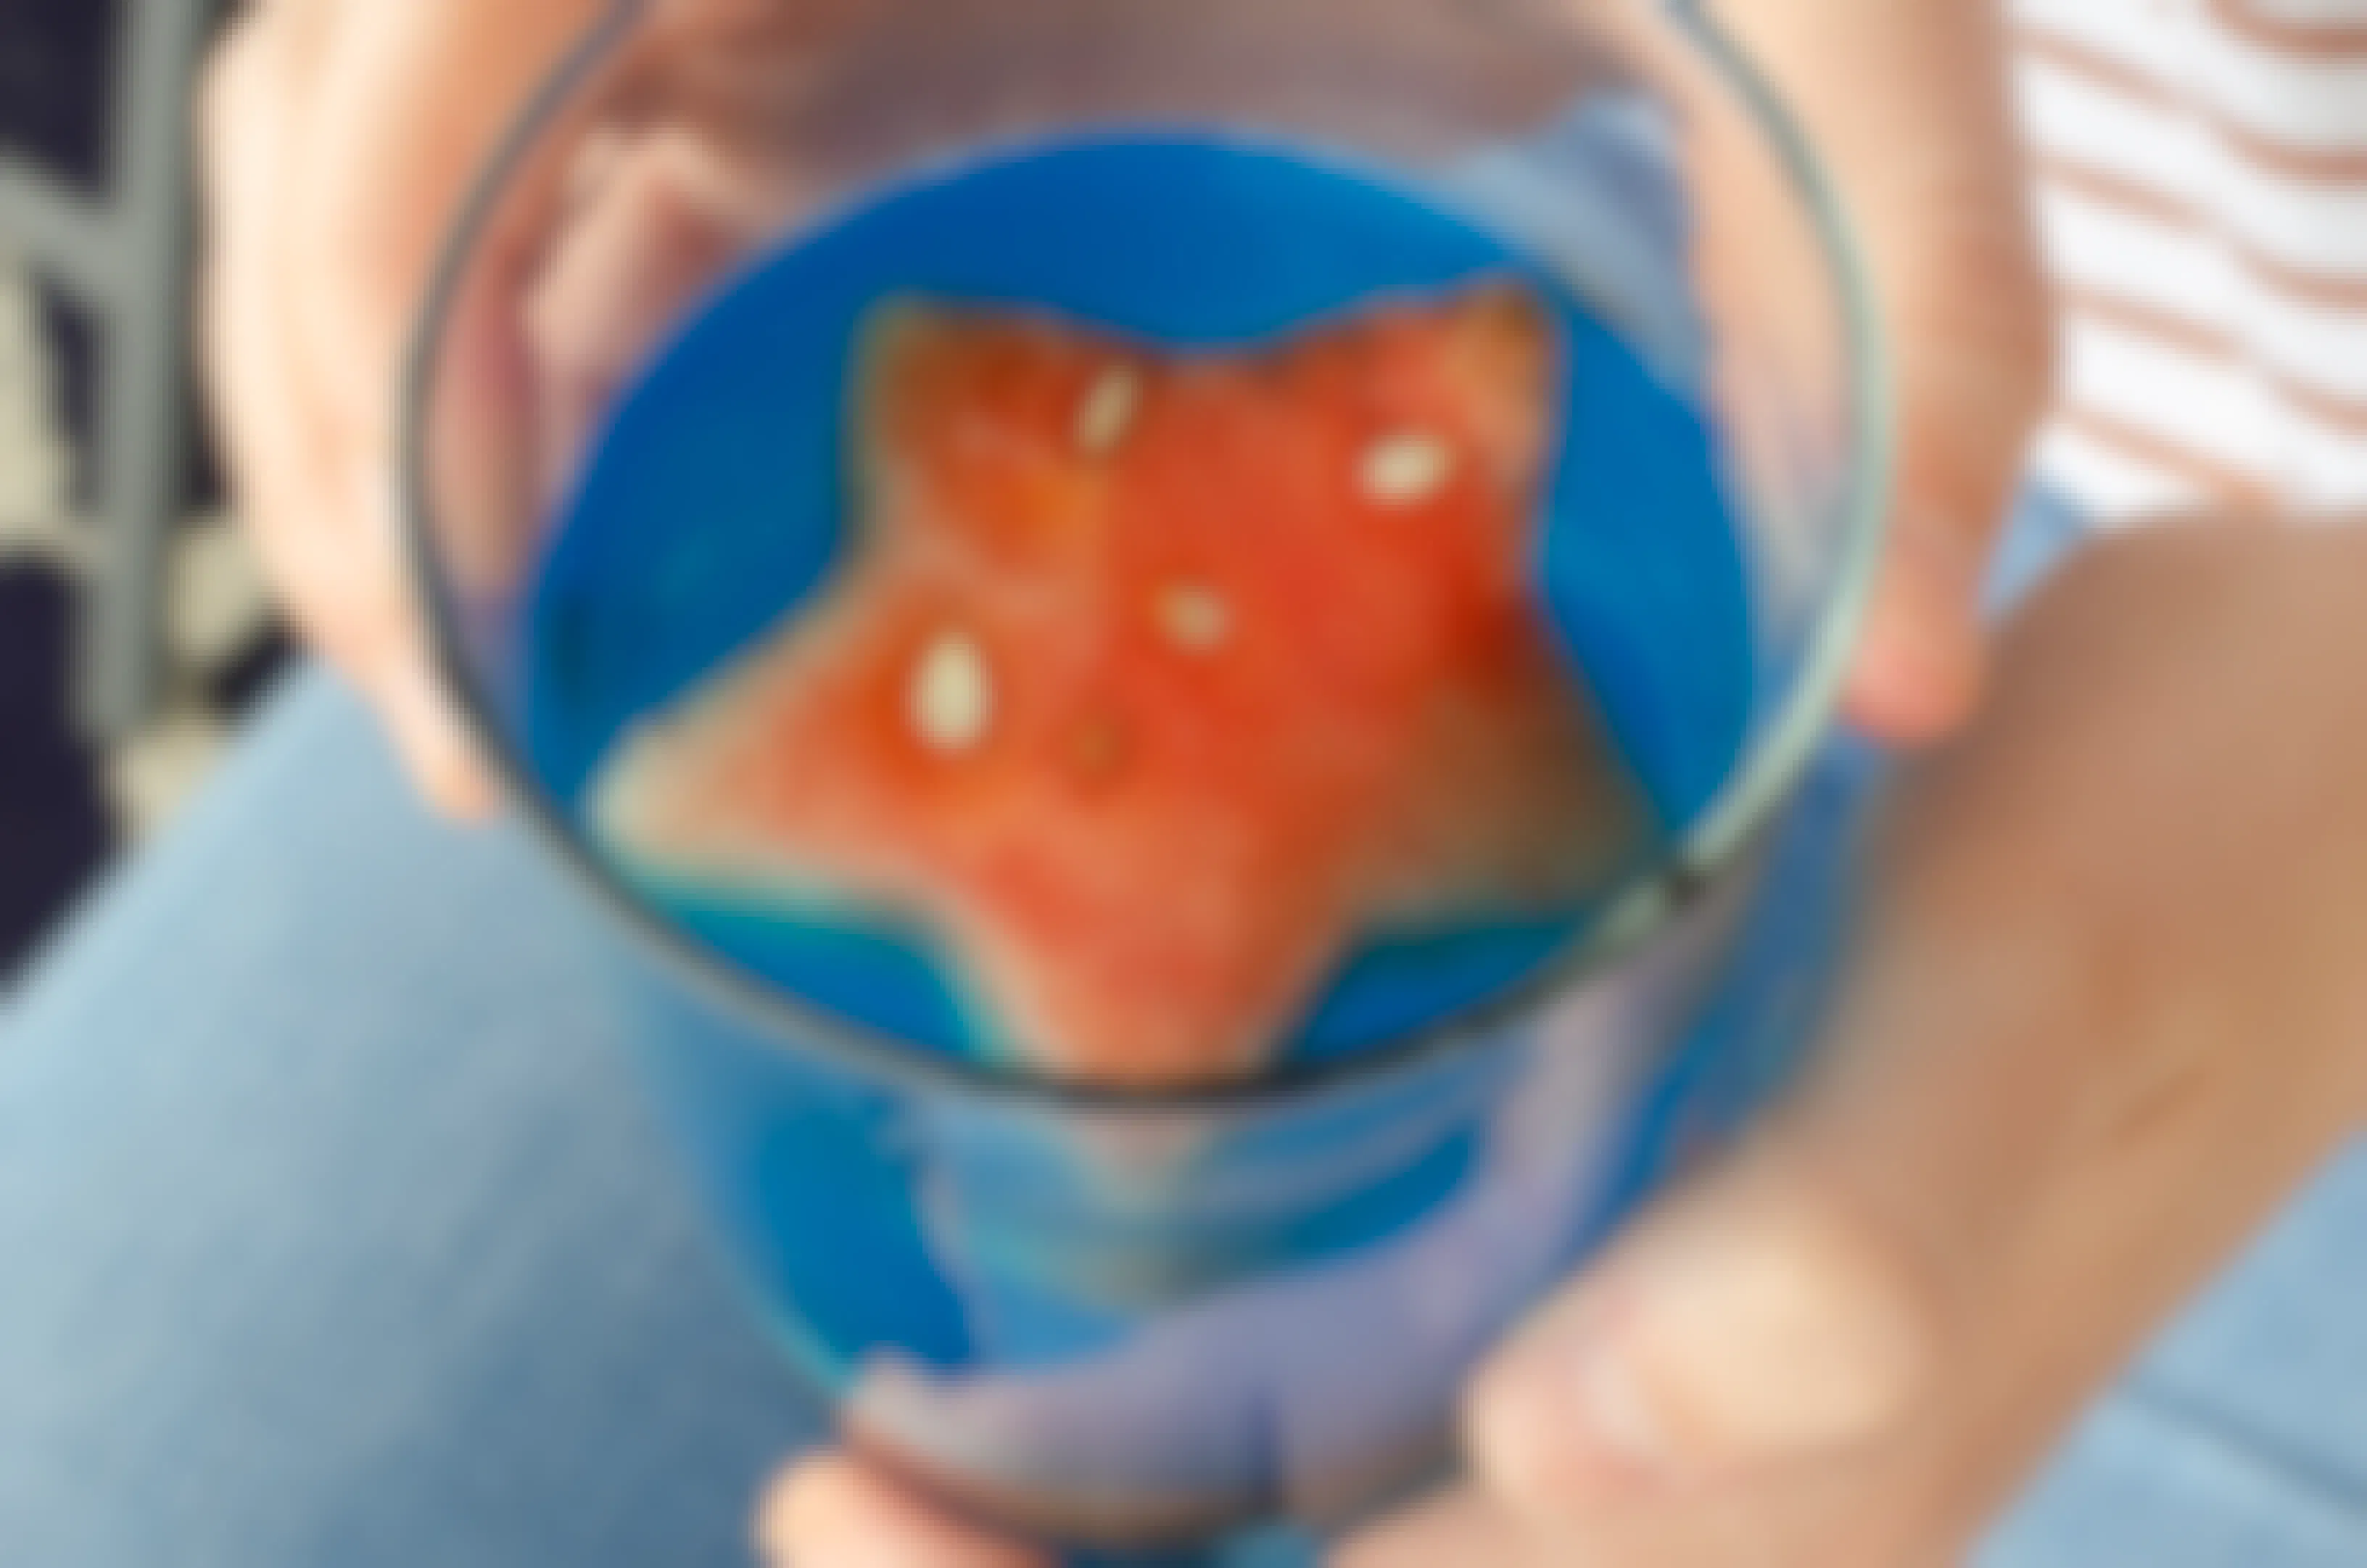 A piece of watermelon cut like a star in a blue drink glass.